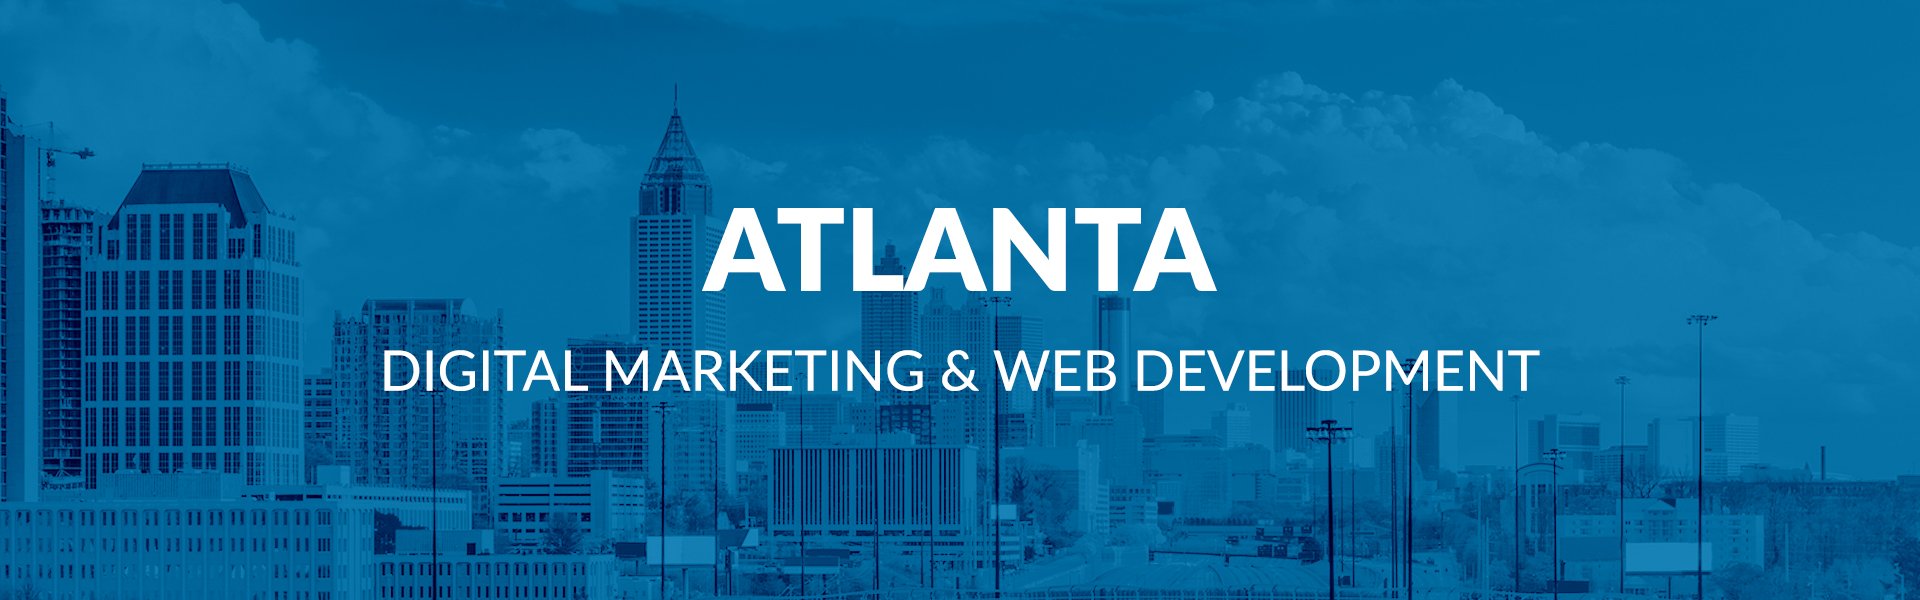 Atlanta Digital Markhttps://www.fullmedia.com/ready-admin/page/manage-block/49/17#eting and Web Development Agency